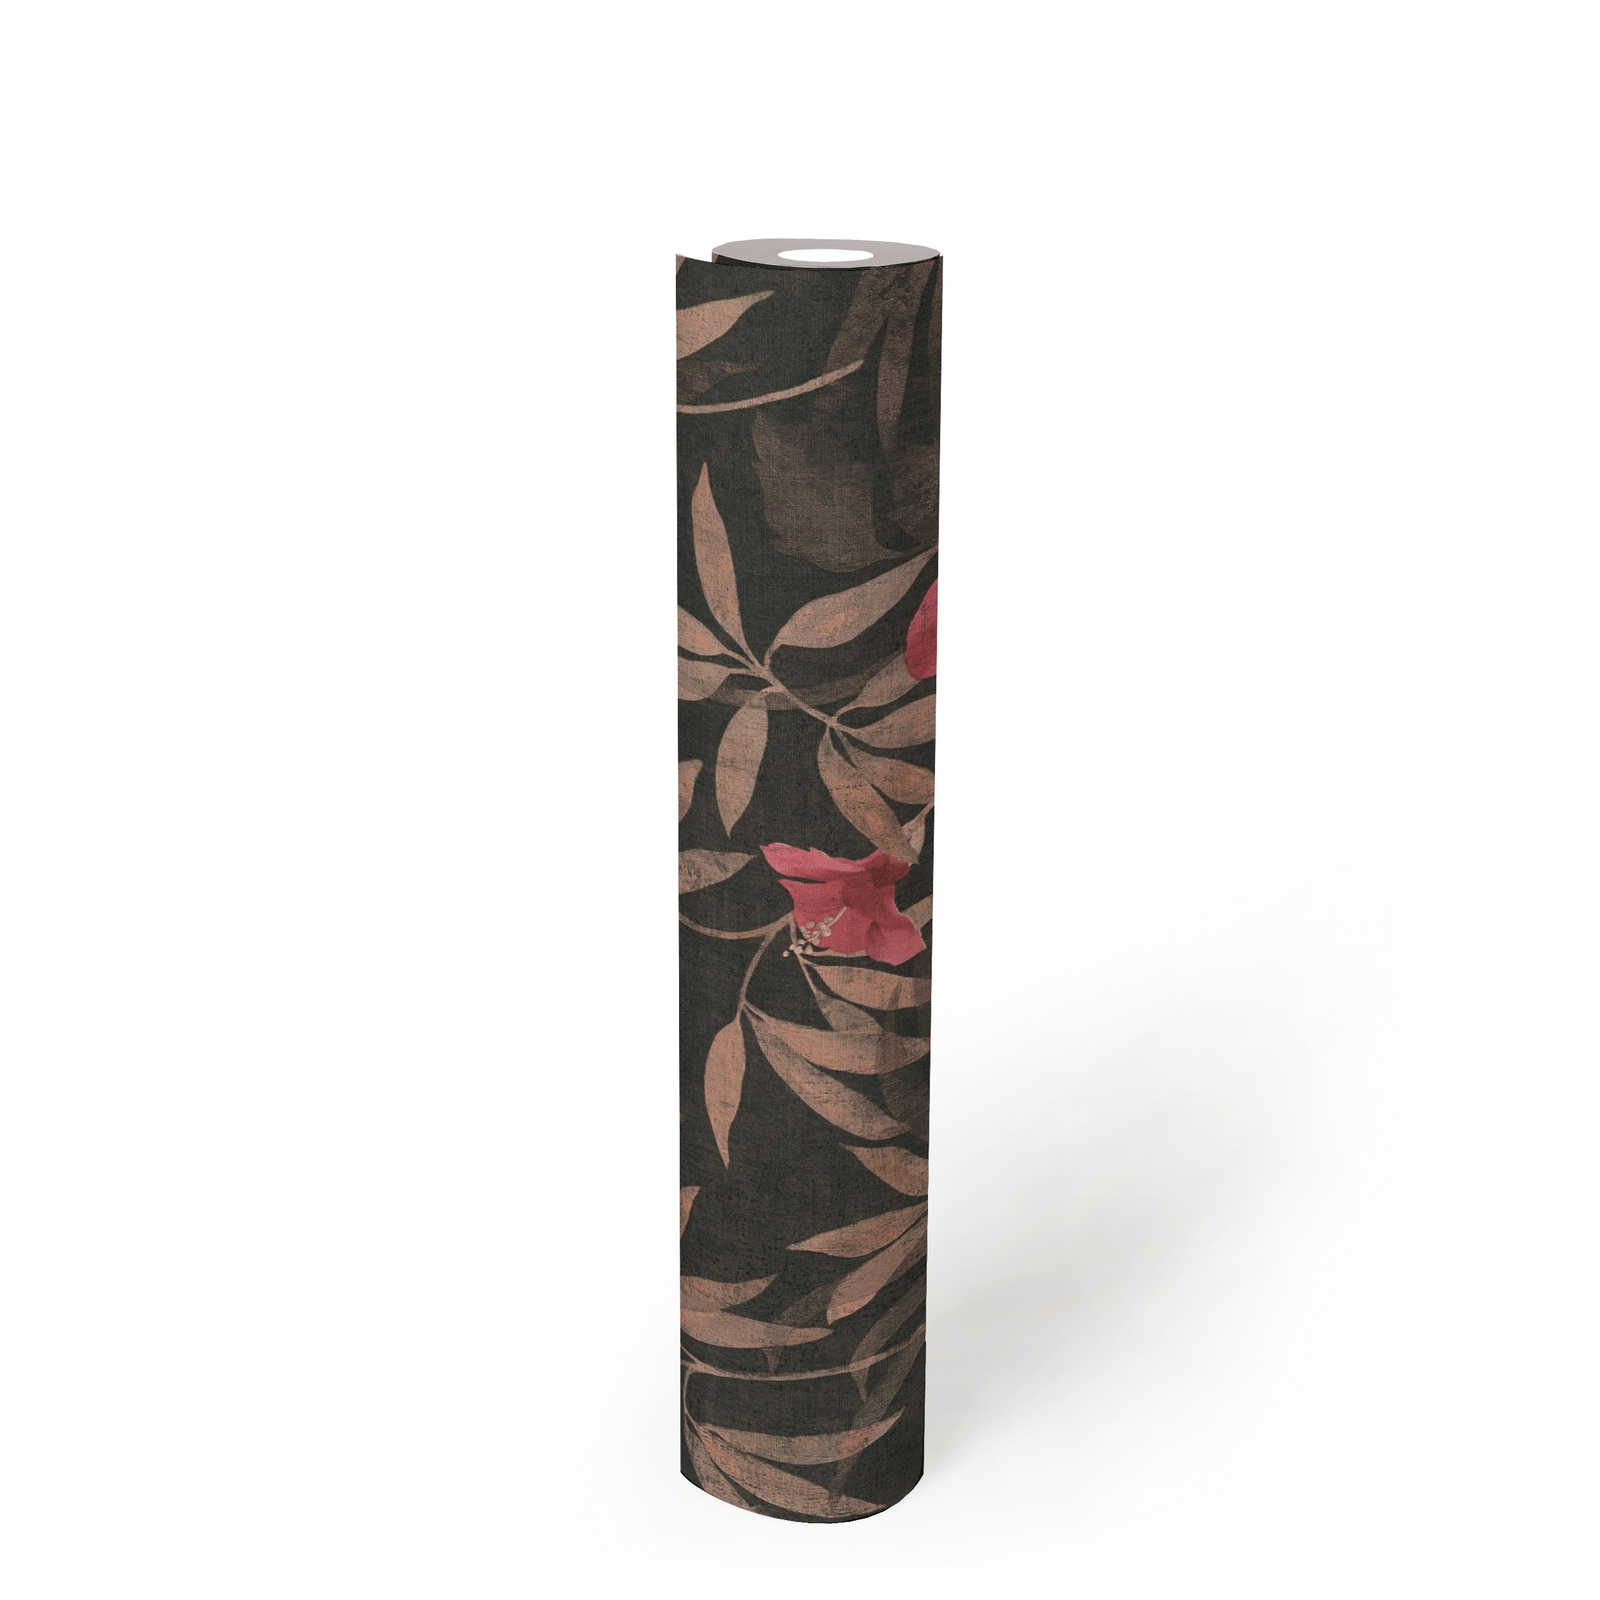             Tapete Dschungel Blätter & Hibiskus Blüten – Braun, Rot
        